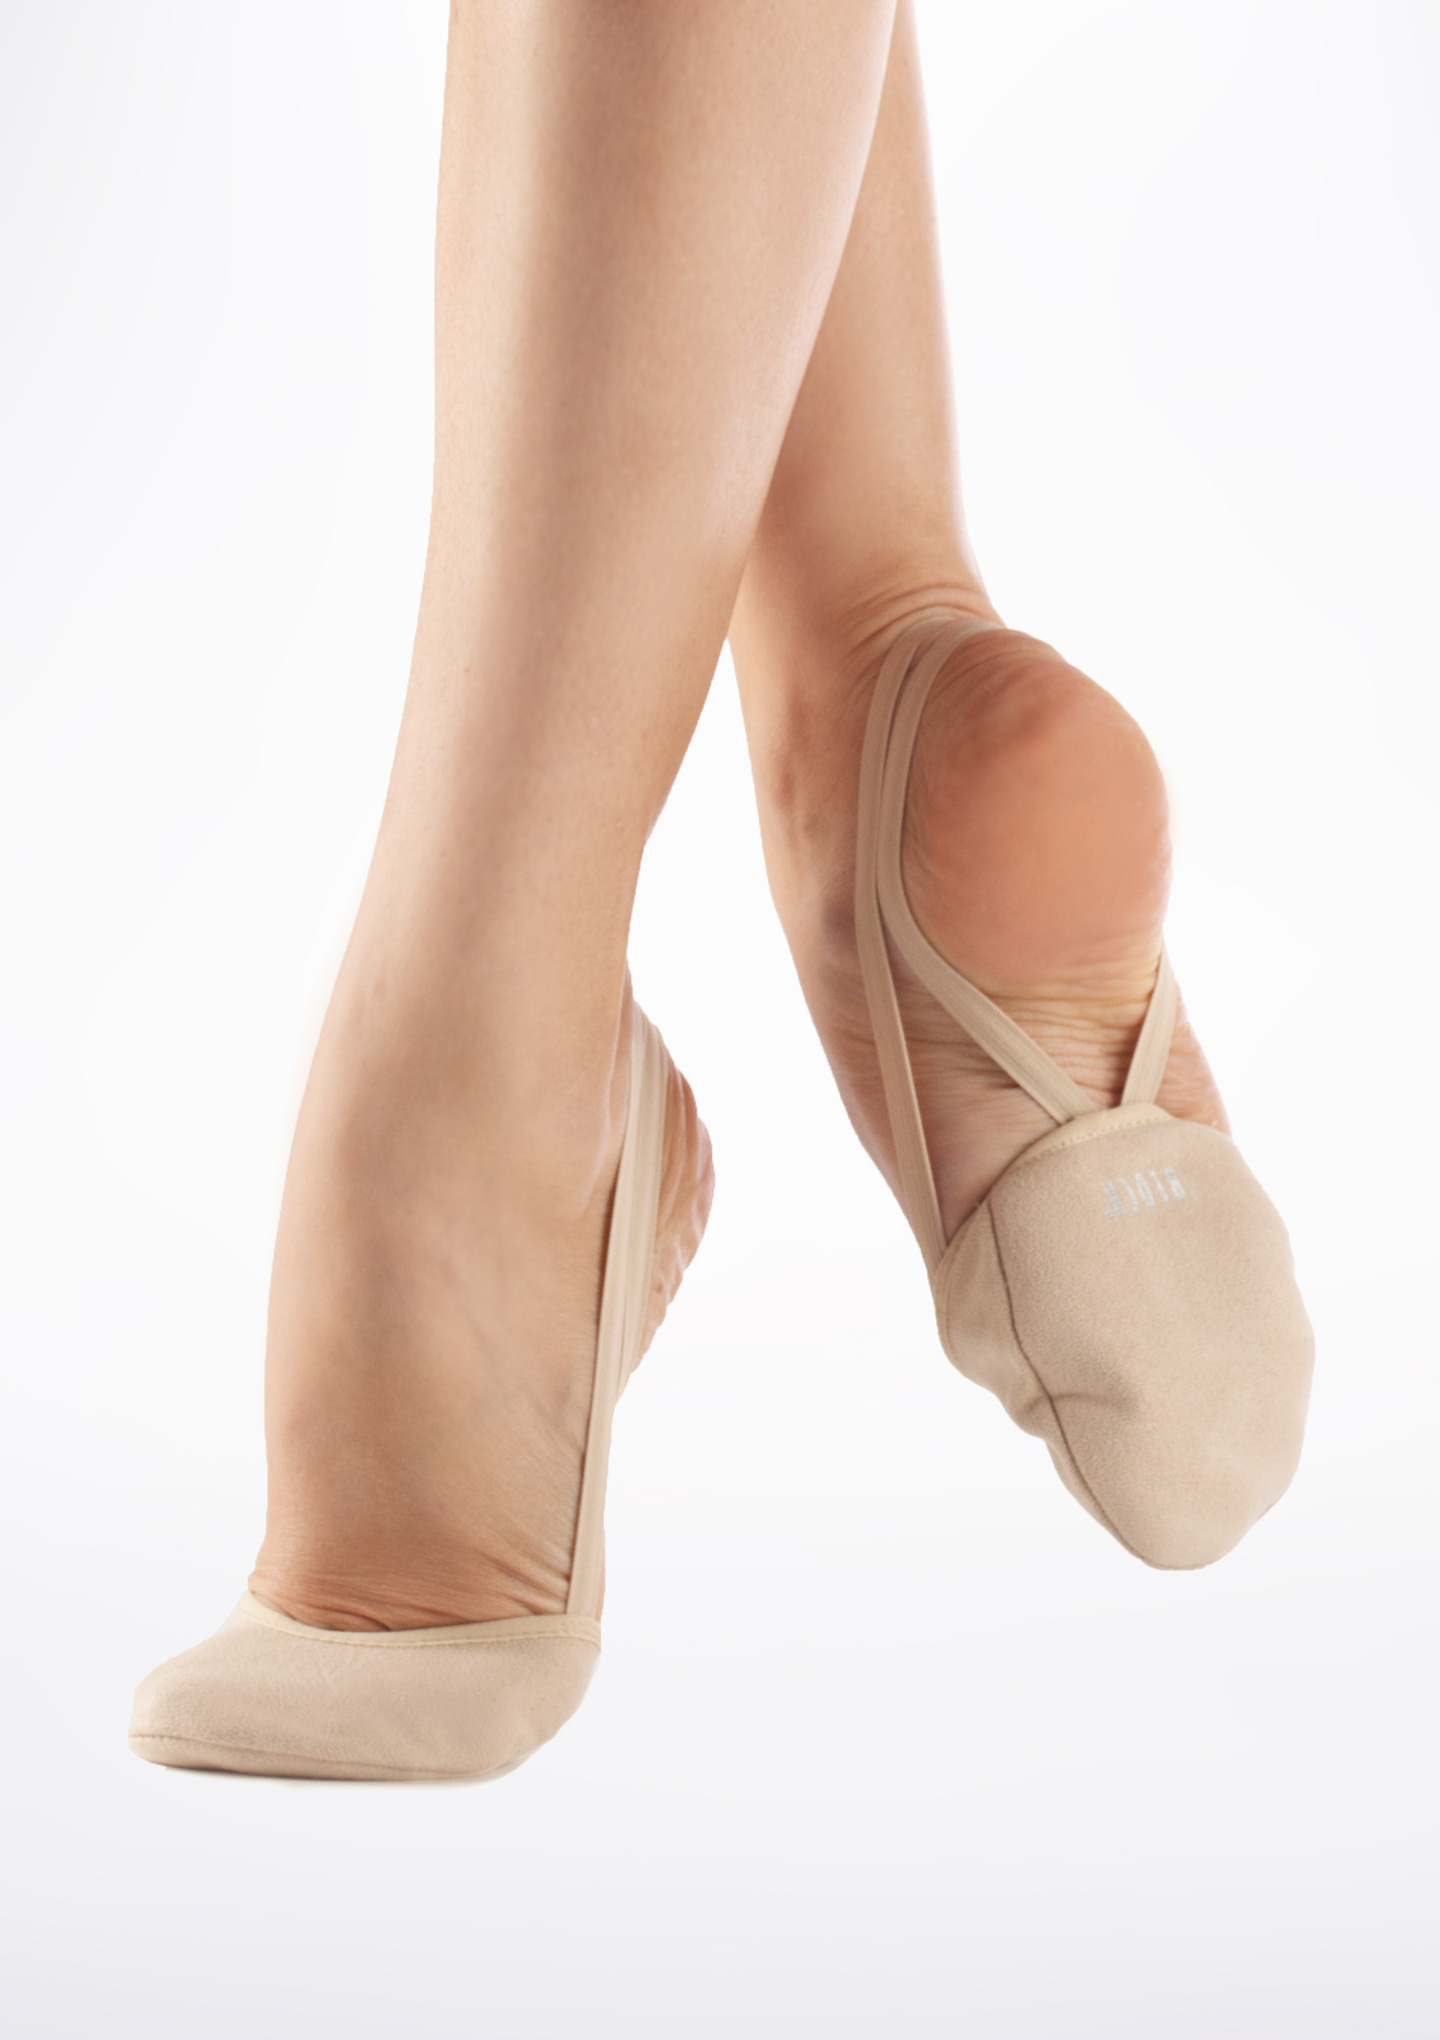 contemporary dance shoes